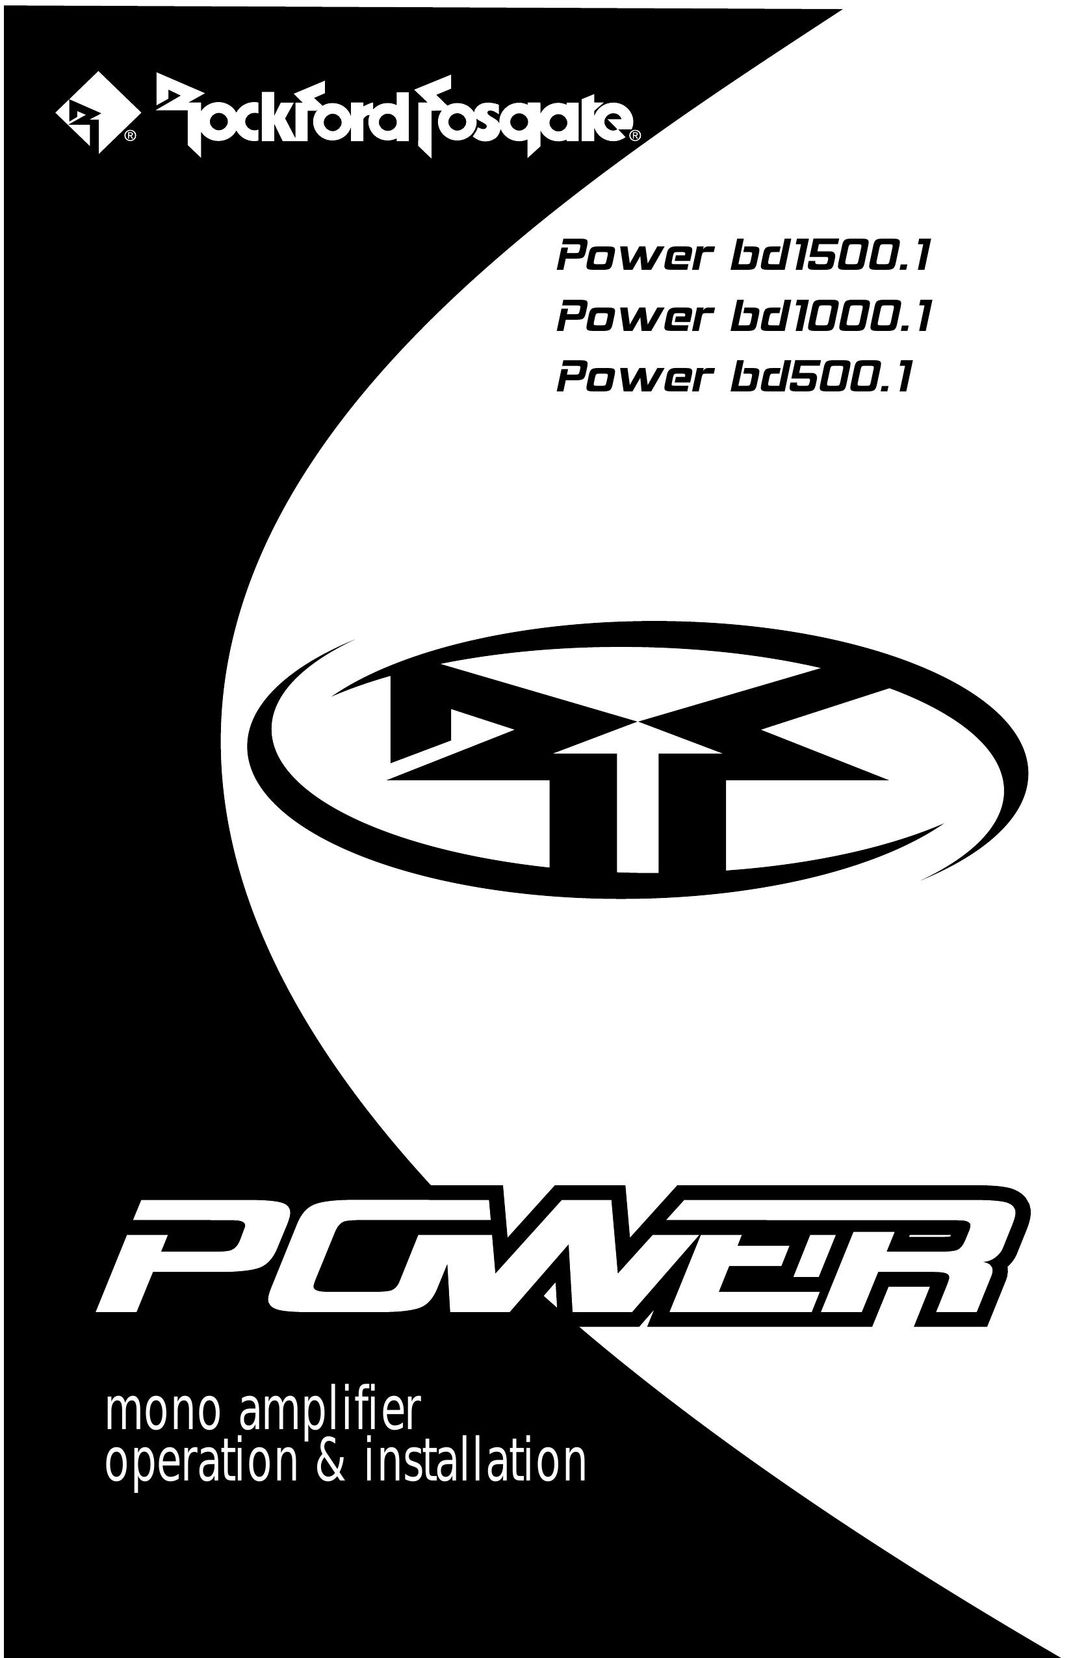 Rockford Fosgate bd1500.1 Stereo Amplifier User Manual